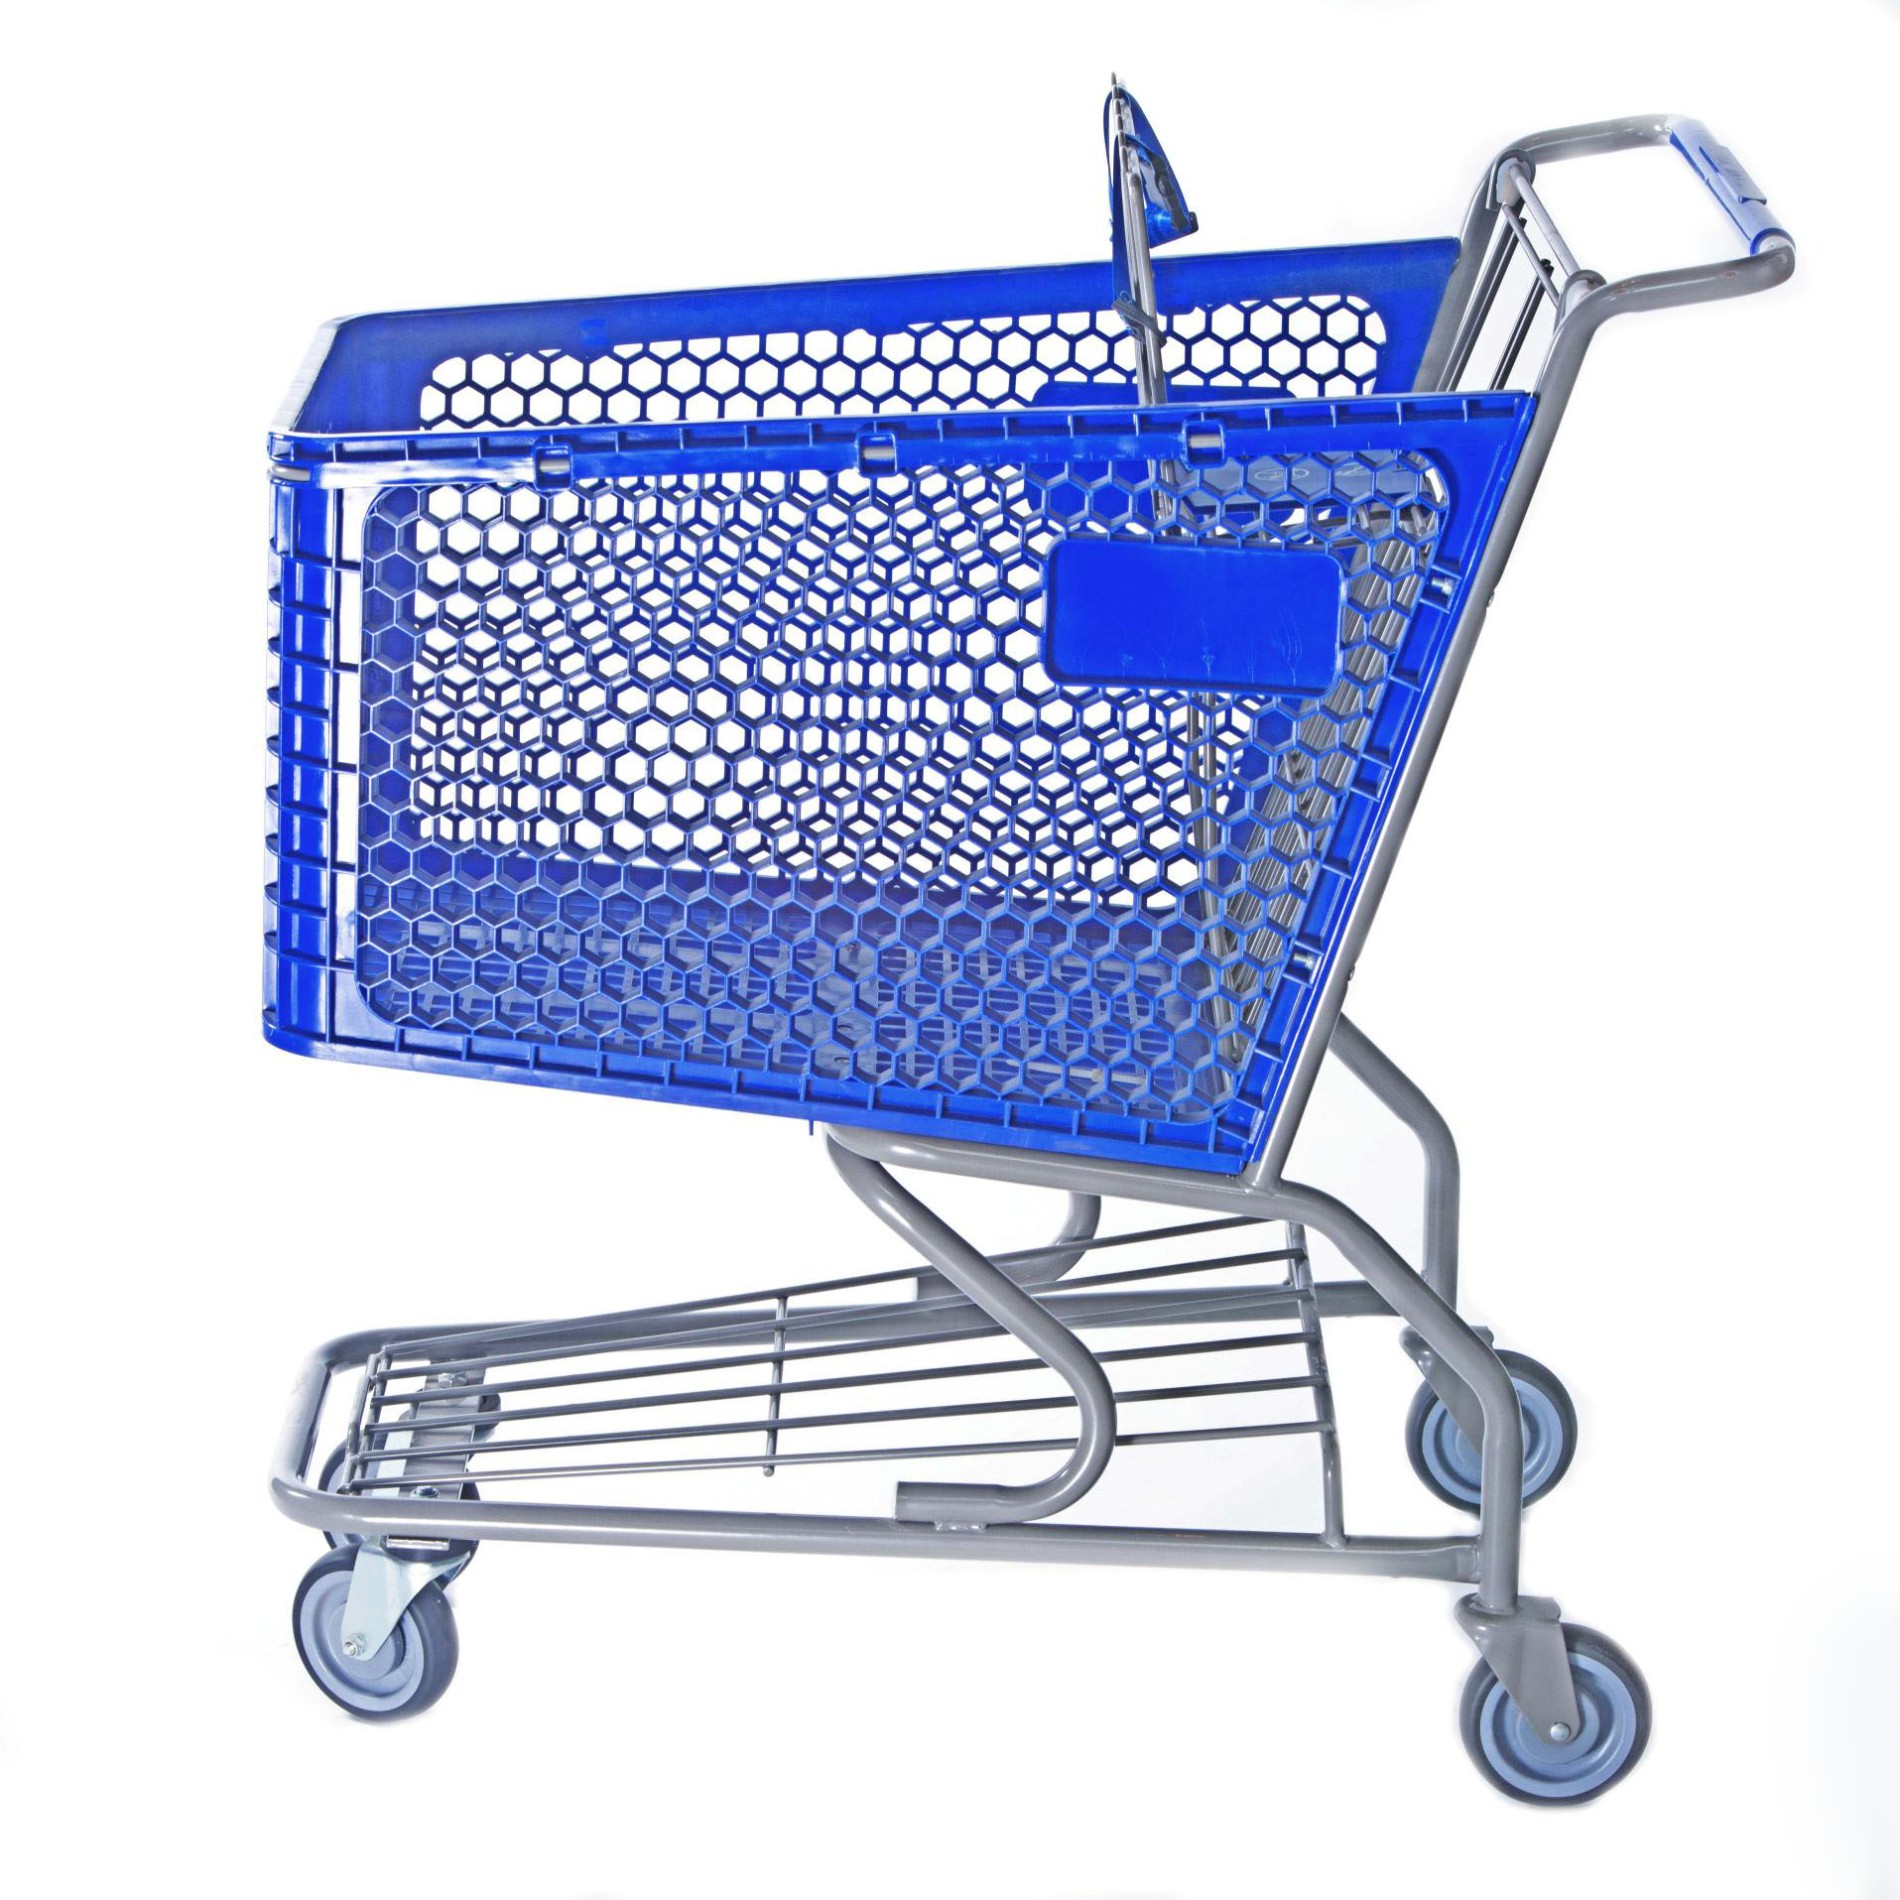 Mini Store Shopping Carts 